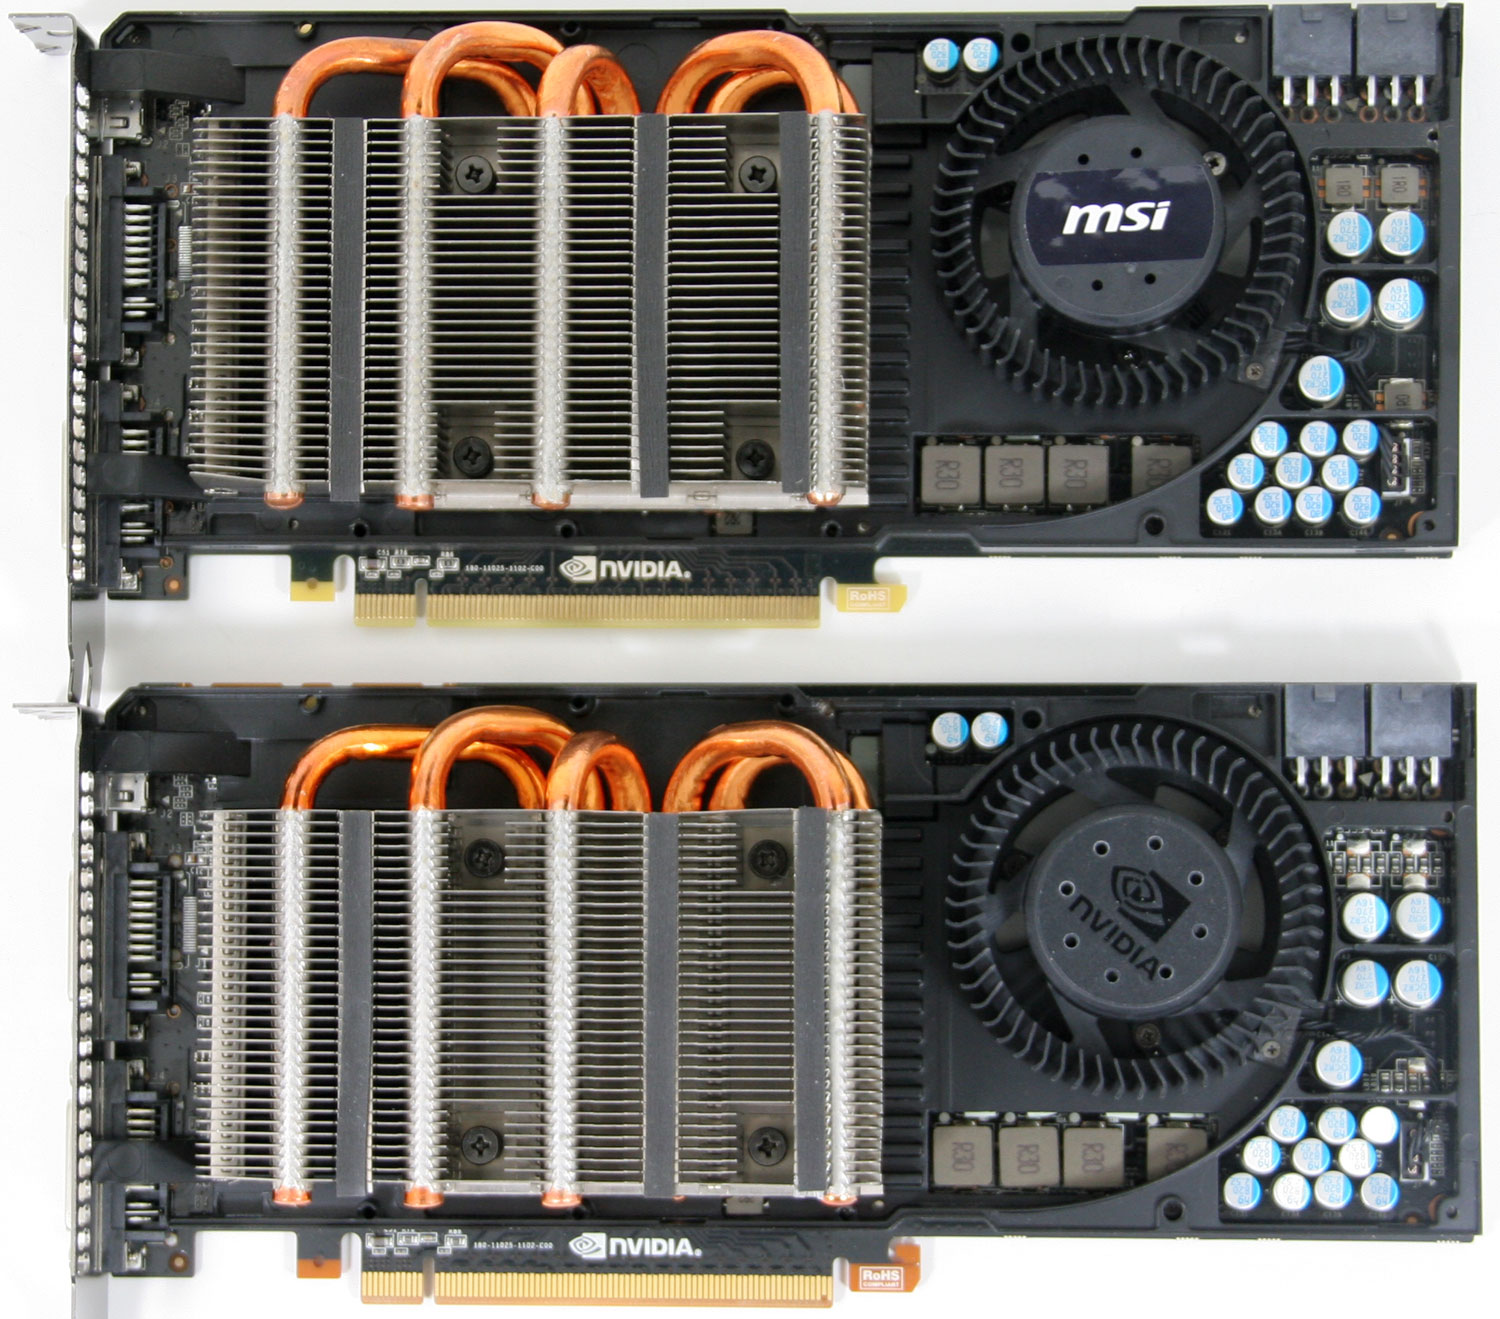 MSI's GeForce N470GTX \u0026 GTX 470 SLI